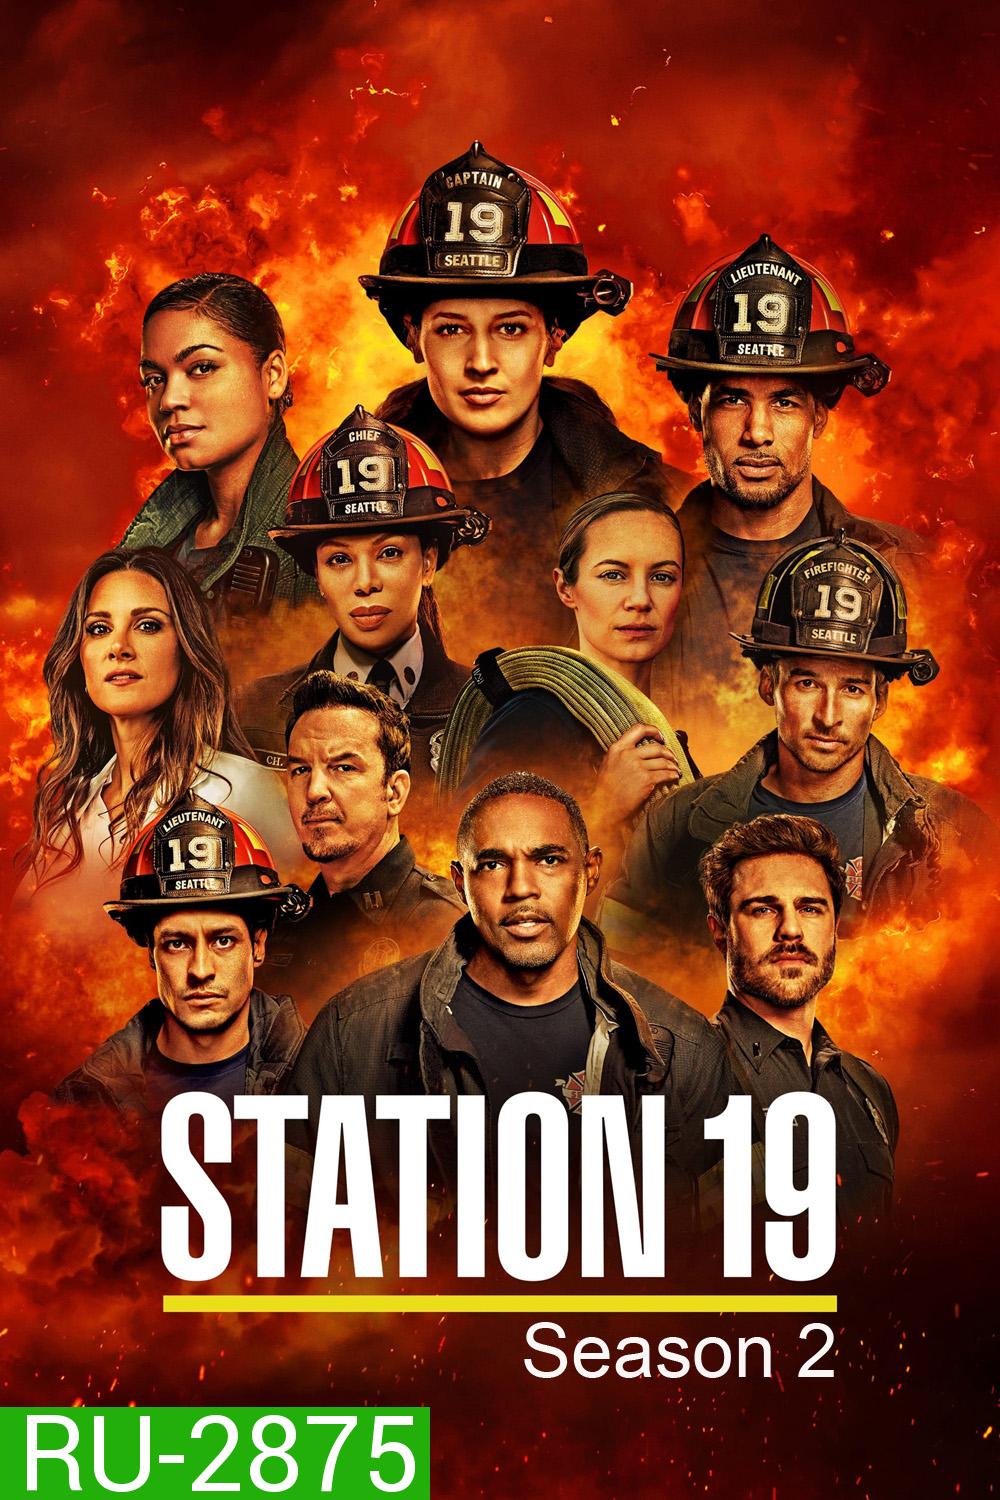 Station 19 Season 2 ทีมแกร่งนักผจญเพลิง (2018) 17 ตอน